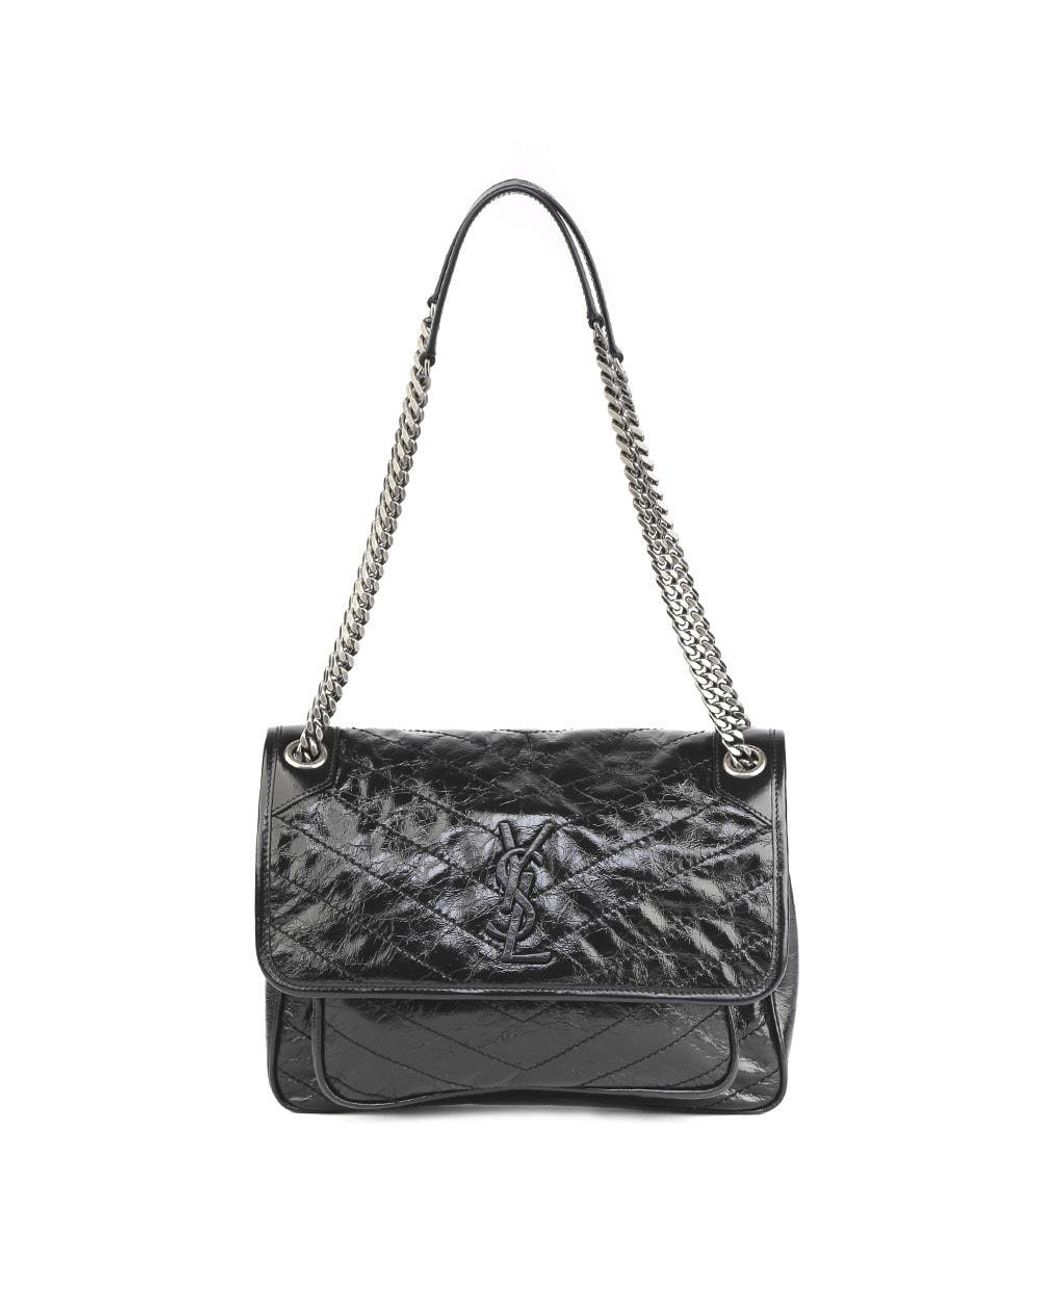 Saint Laurent Medium Niki Bag In Leather in Black | Lyst